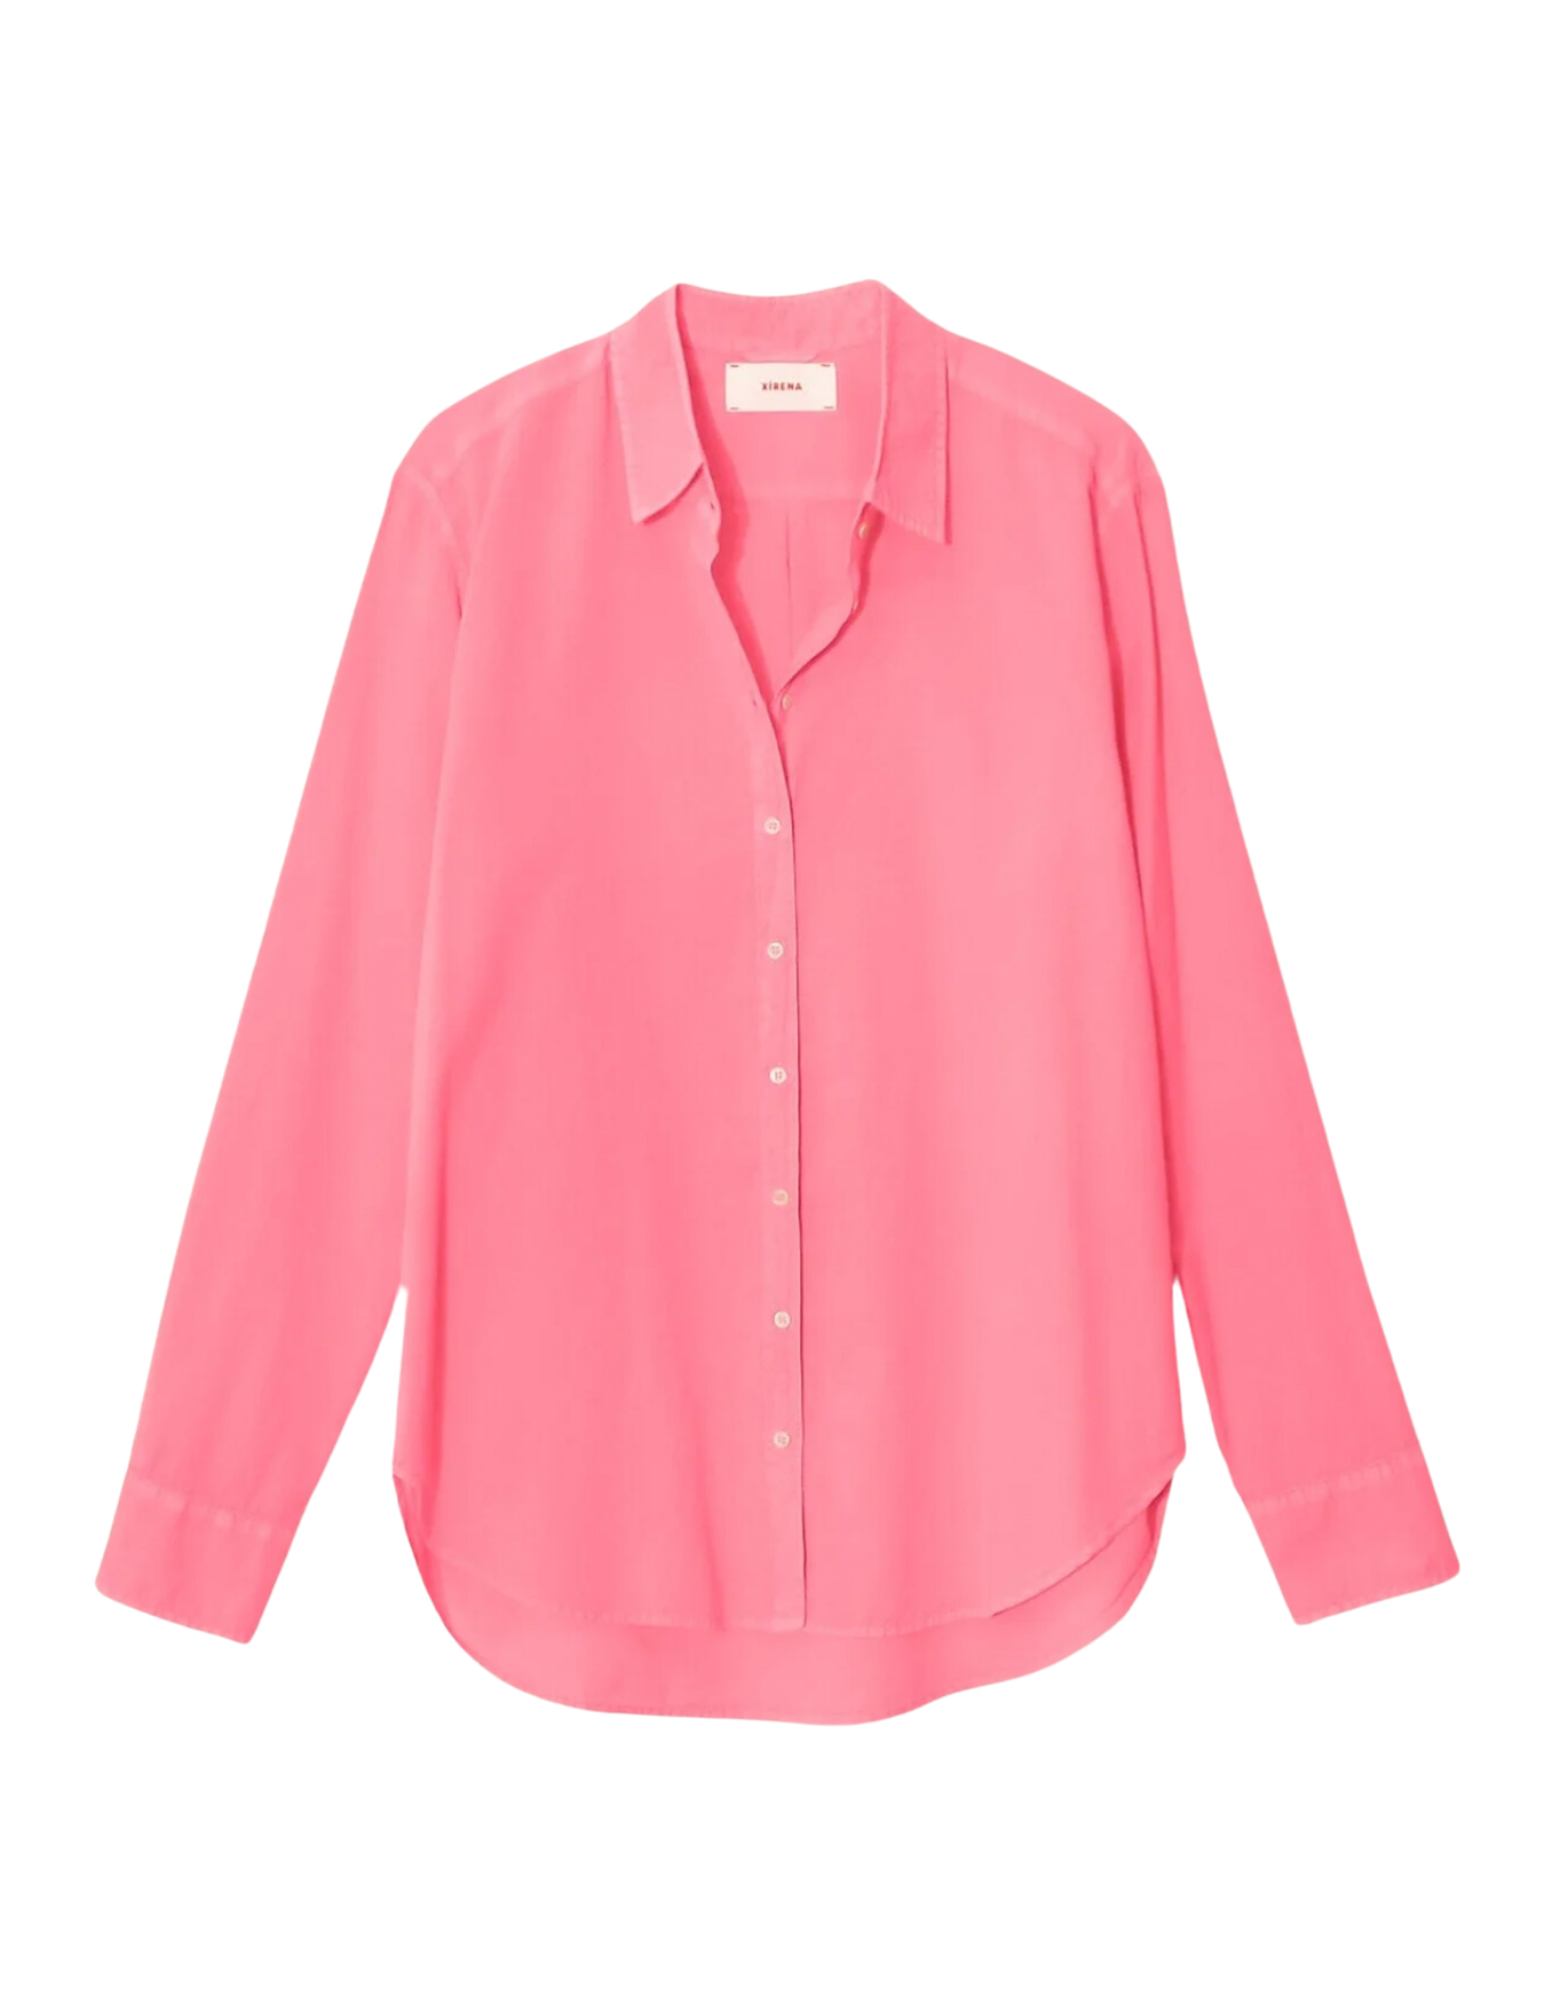 Beau Shirt-Neon Pink